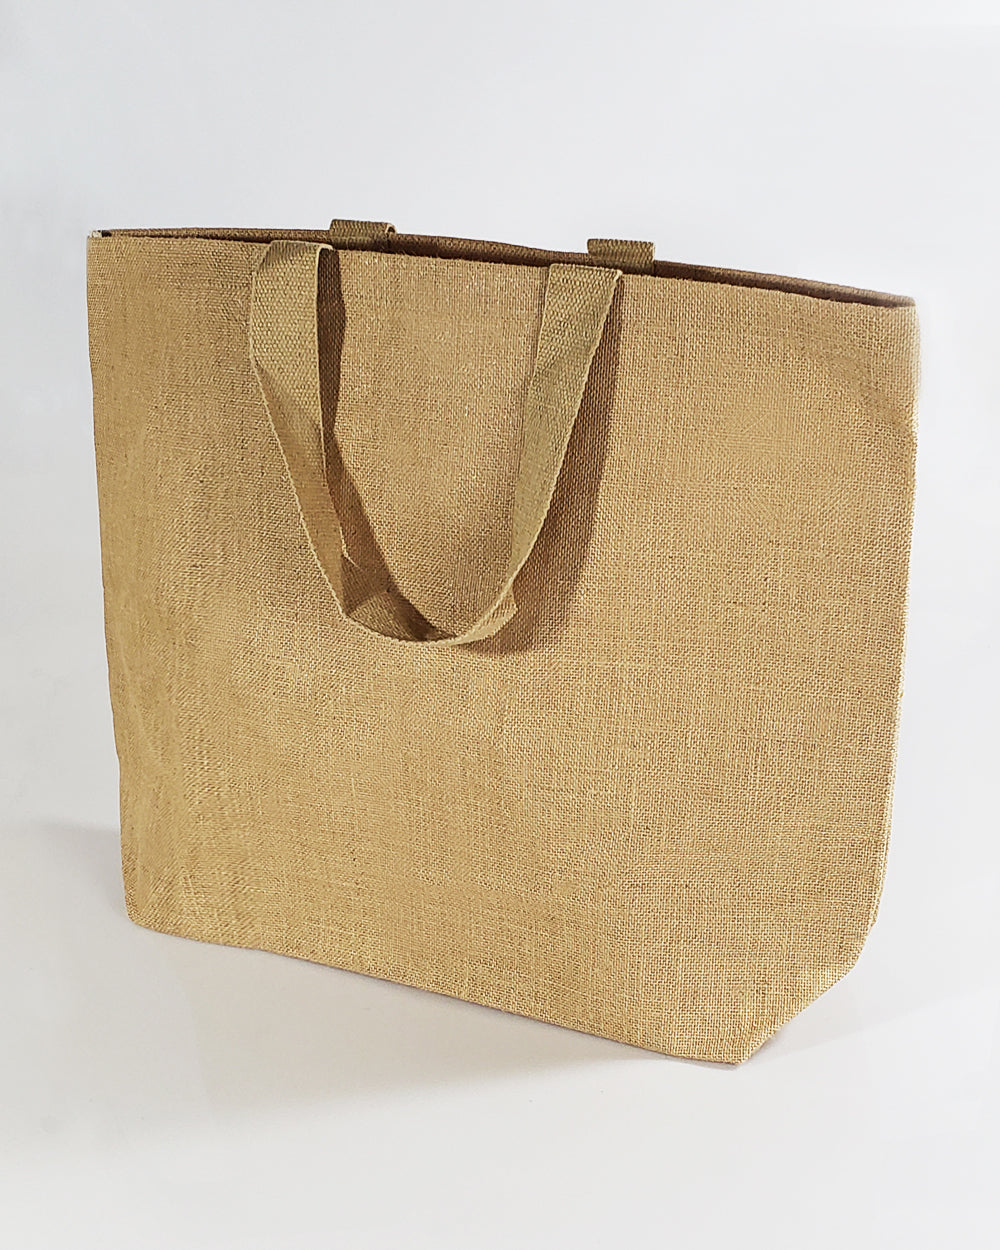 Macrame jute bag handbag You can choose the colors! (white or terracotta) |  eBay